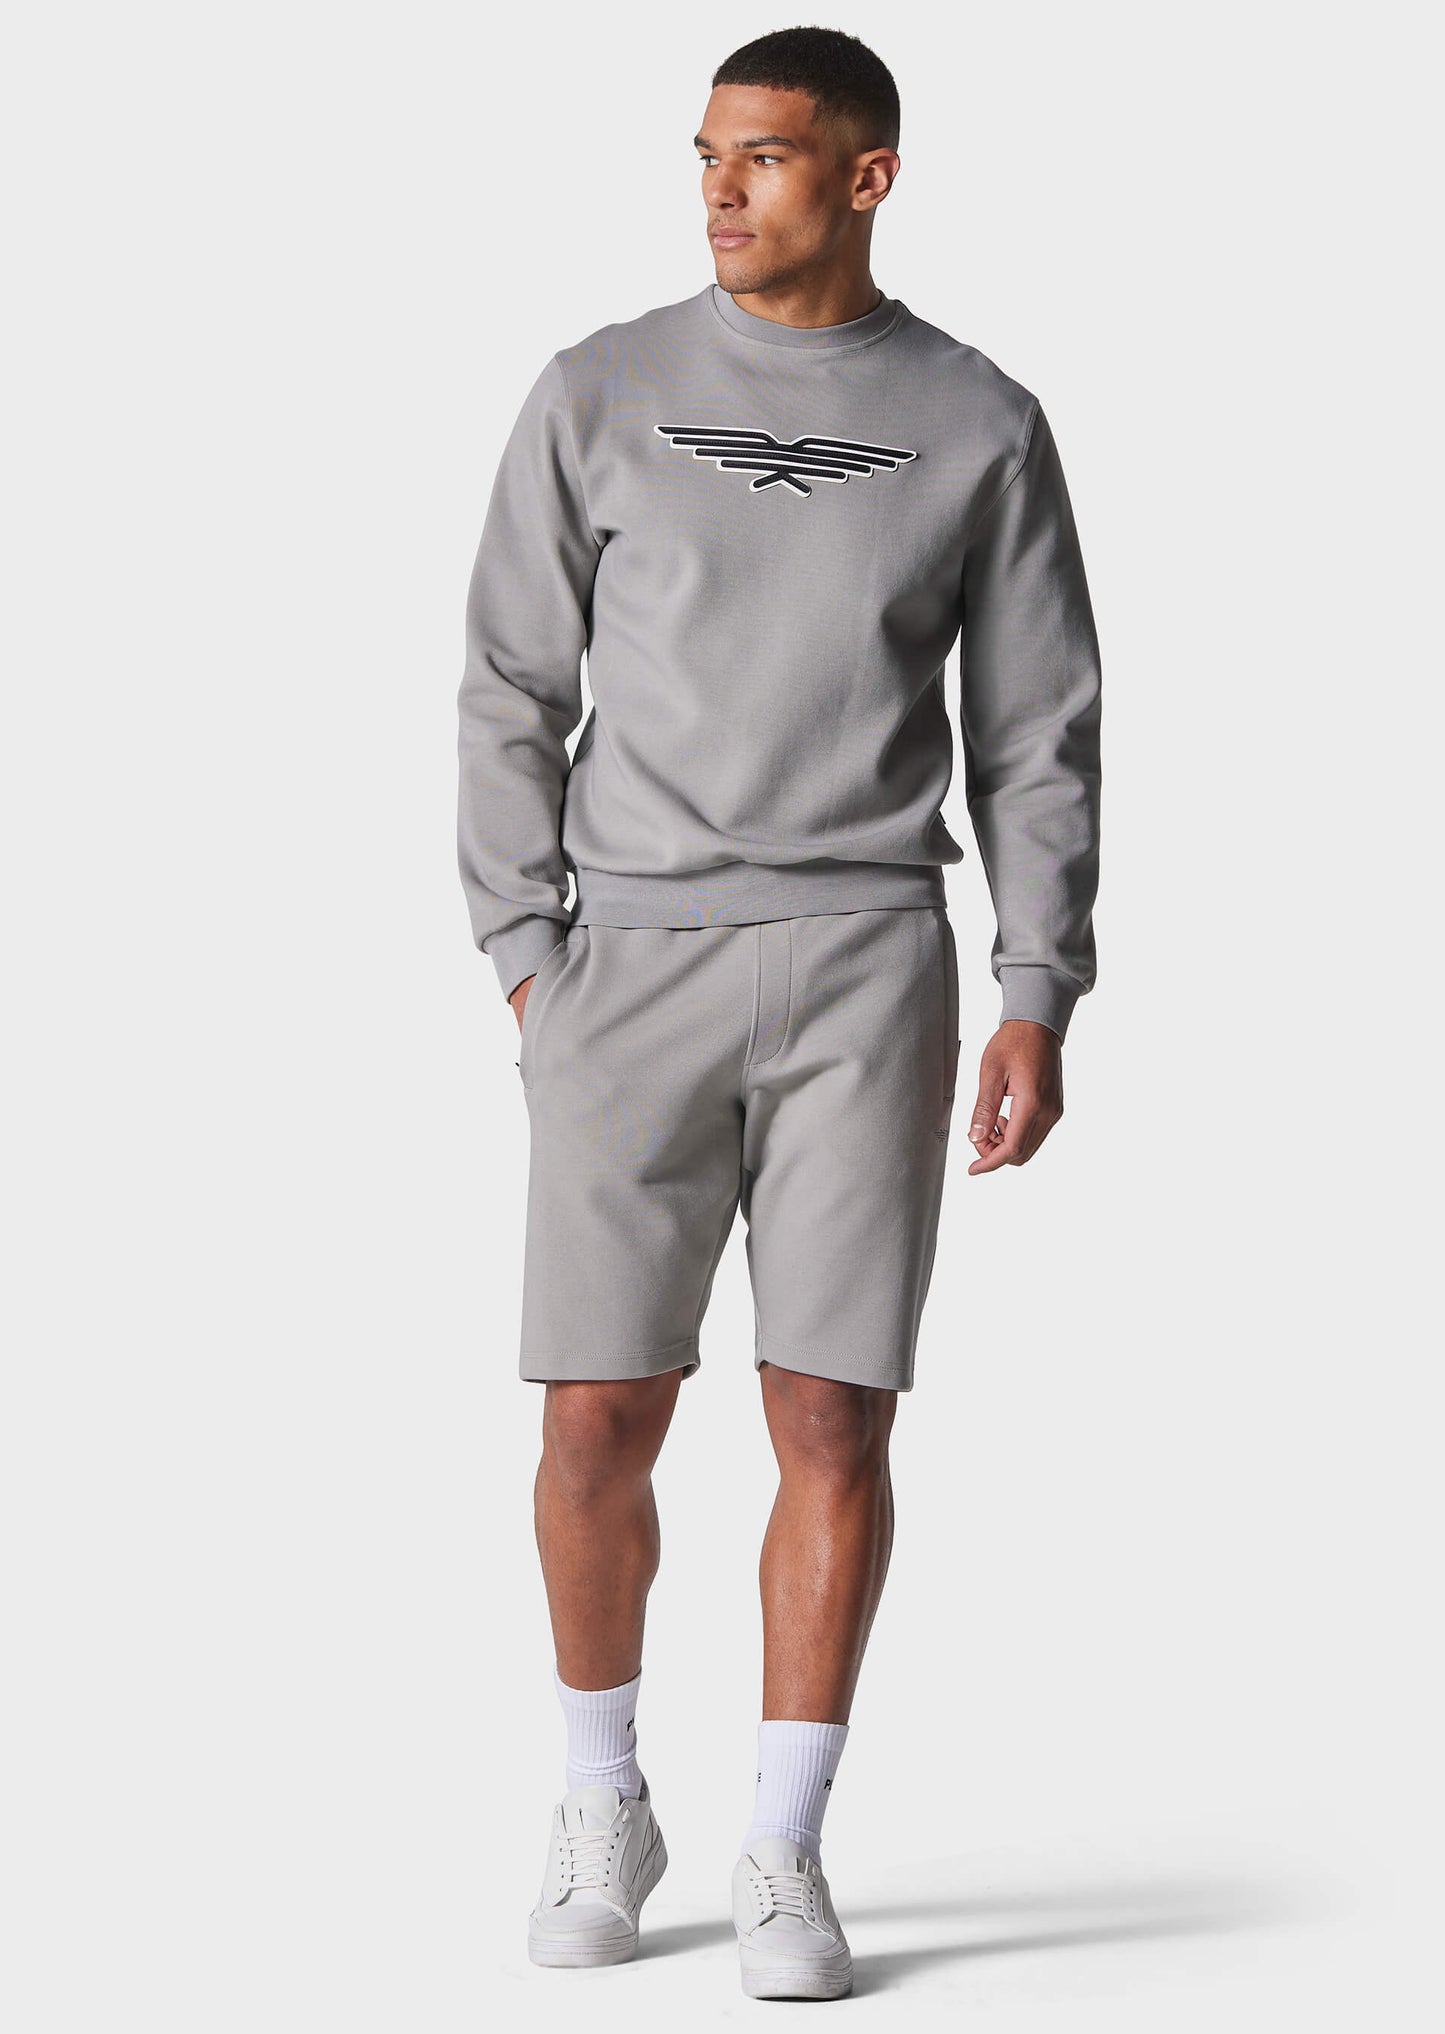 Aimer Stone Grey Sweatshirt